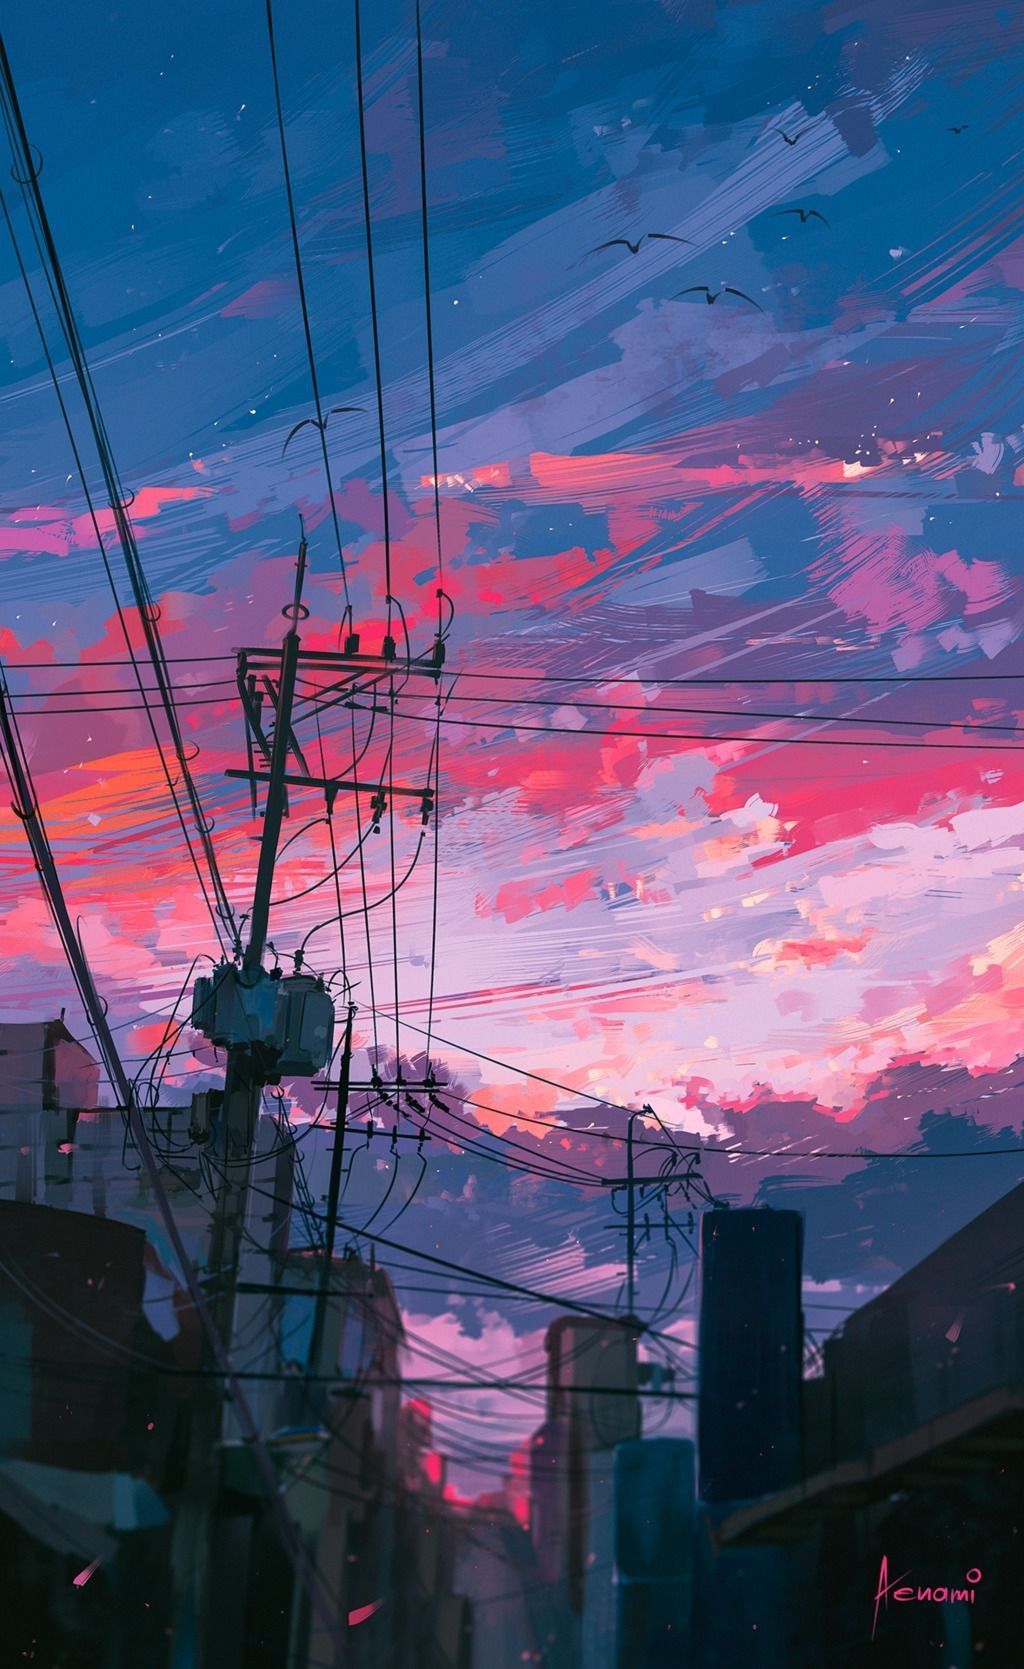 Anime wallpaper. Scenery wallpaper, Anime scenery, Digital painting